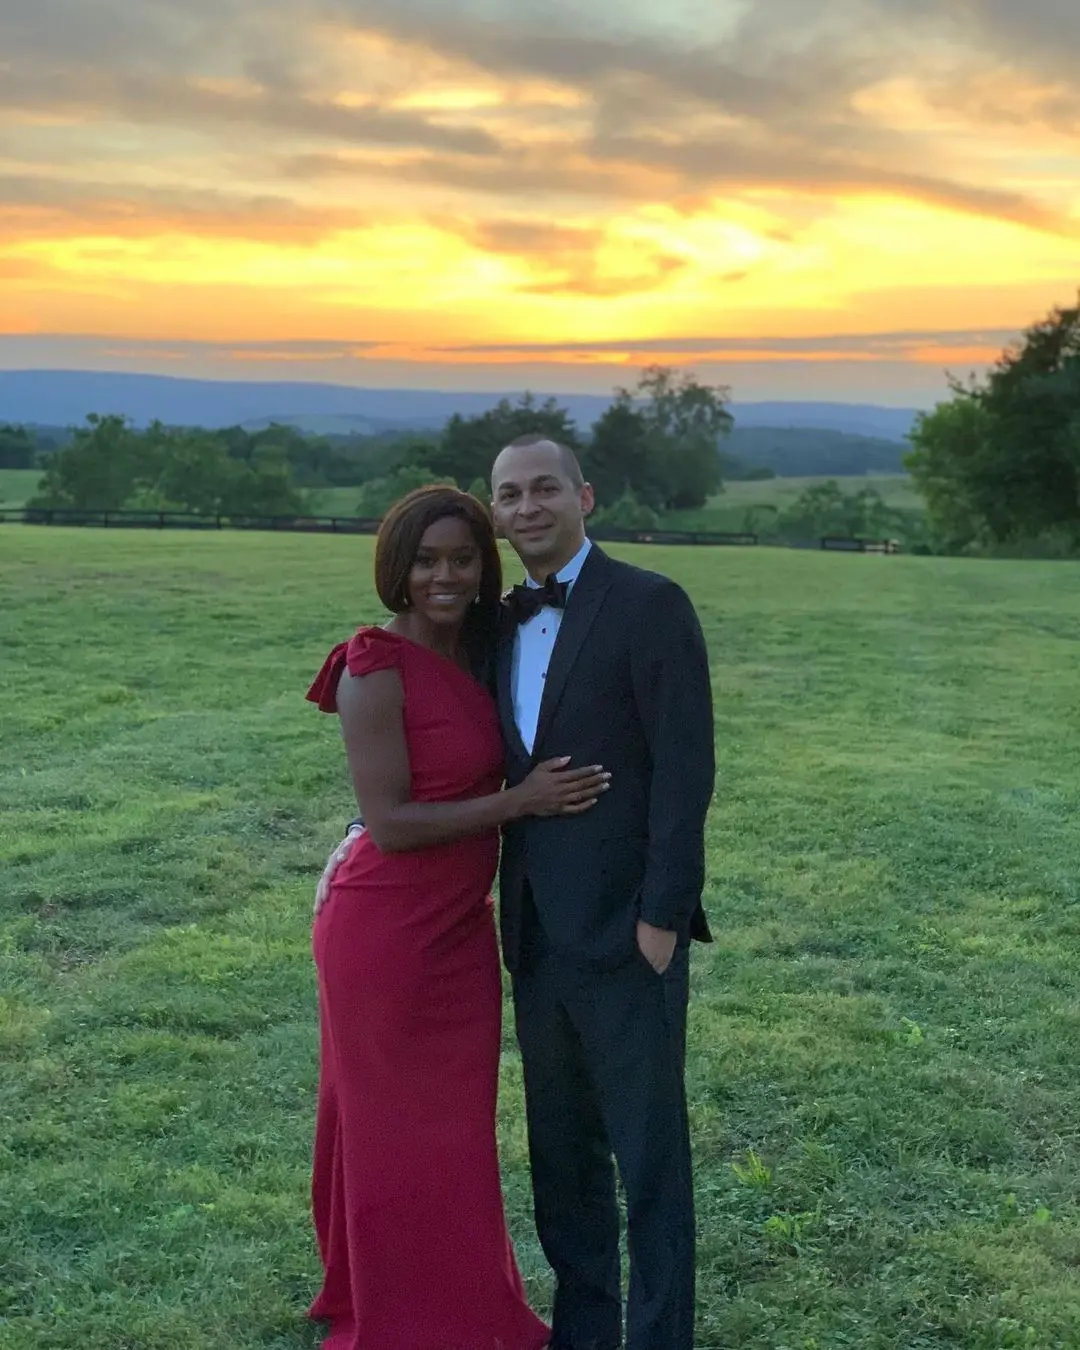 Sherree Burruss and David Cruse attending a wedding in Marshall, Virginia on June 17, 2019.